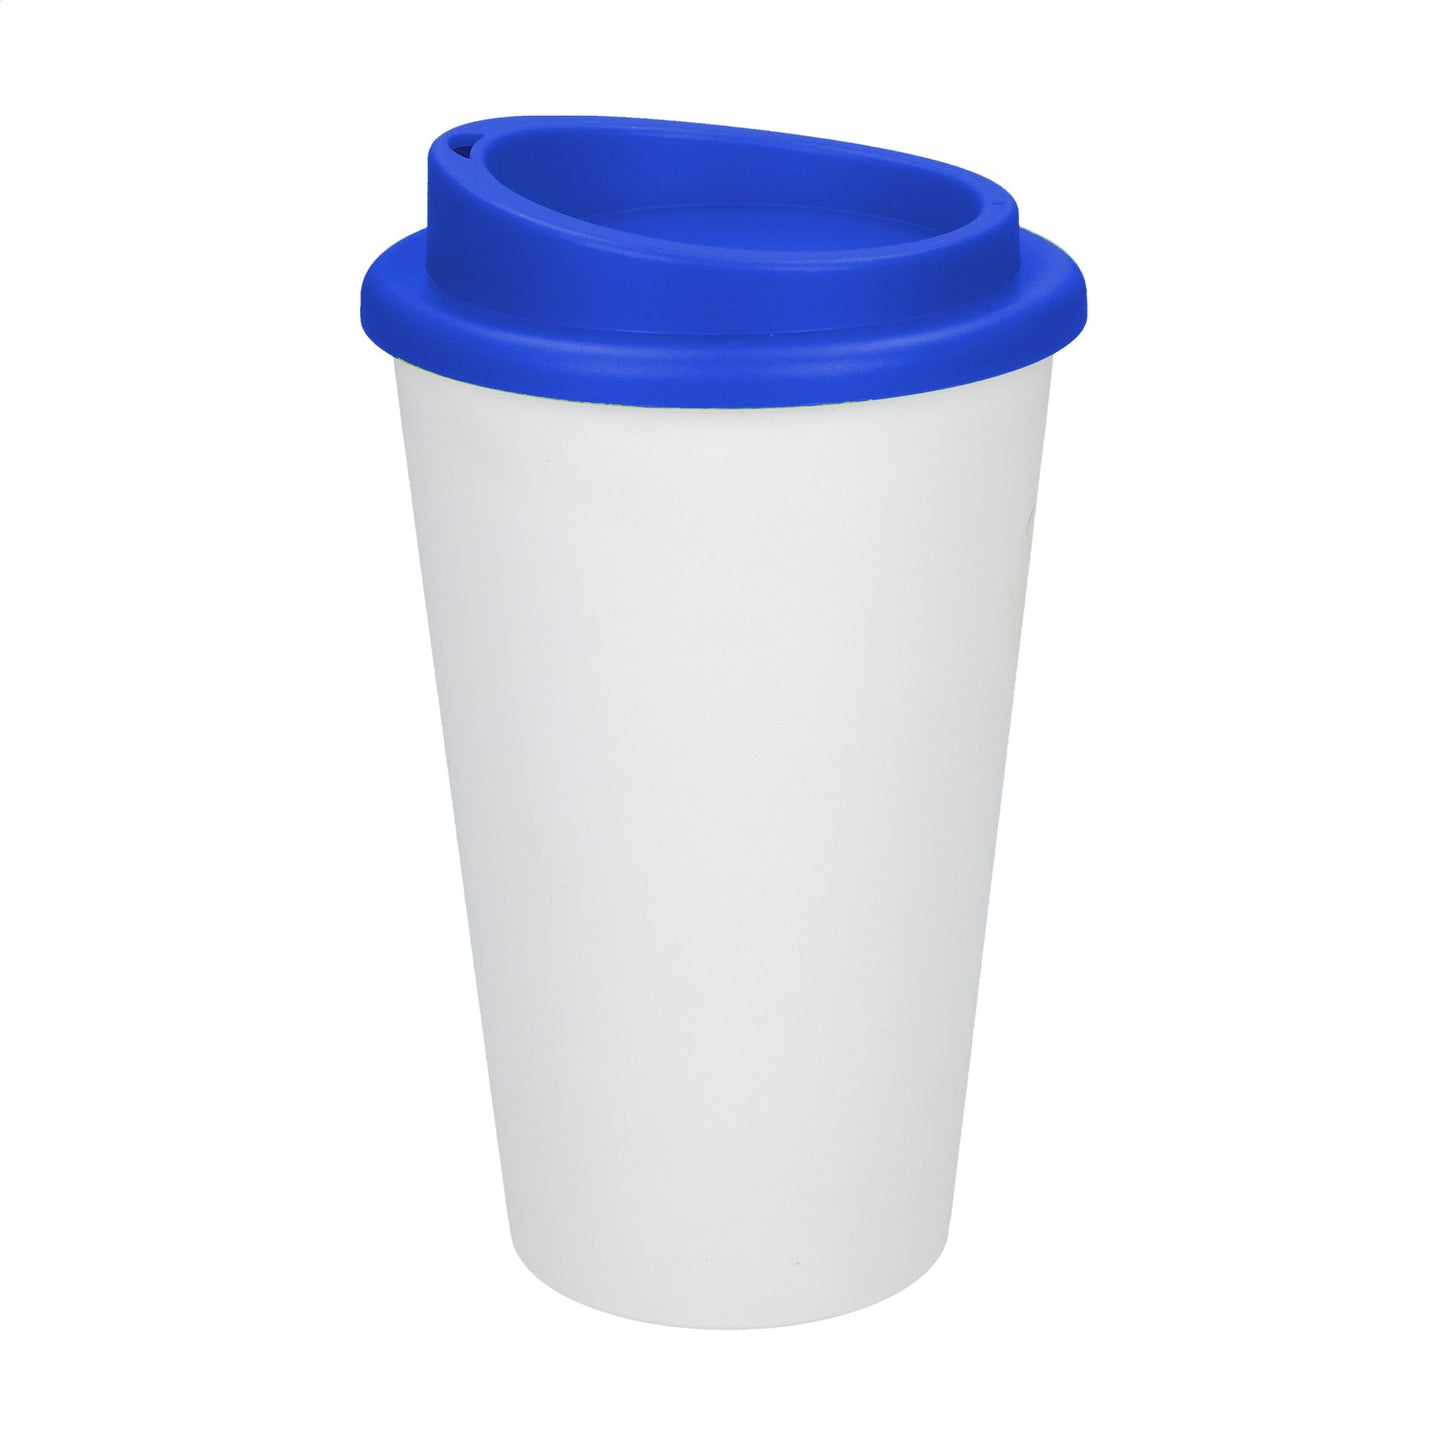 Coffee Mug Premium 350 ml Kaffeebecher